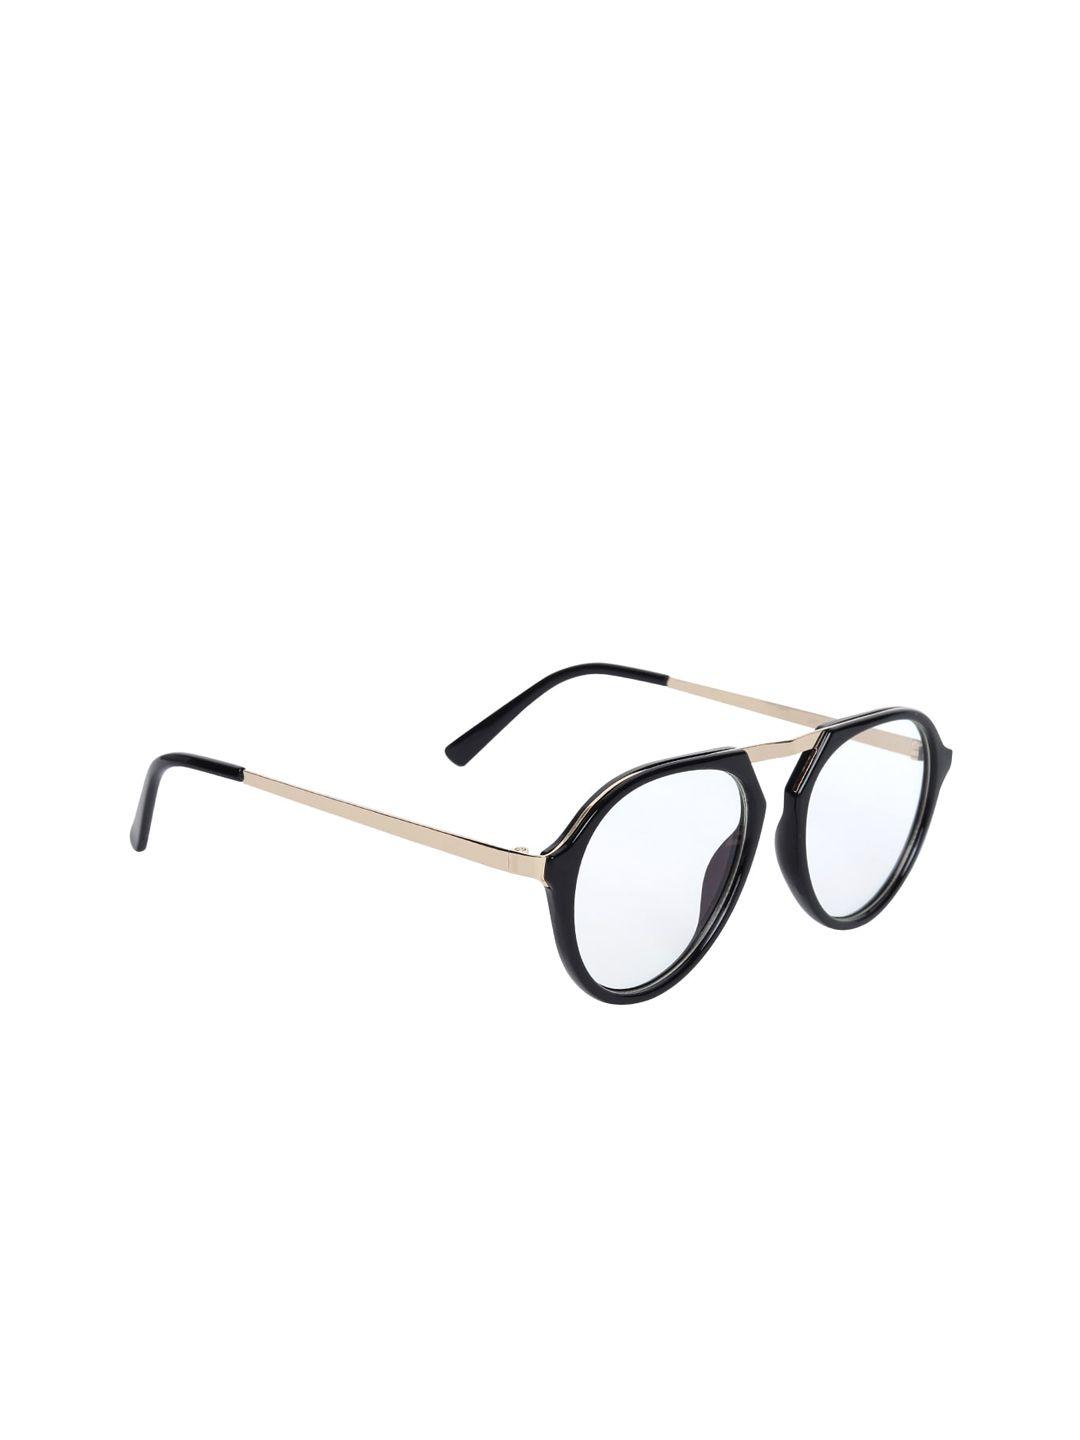 peter jones eyewear unisex black solid full-rim aviator frame with zero-power anti-glare lenses-2707gd